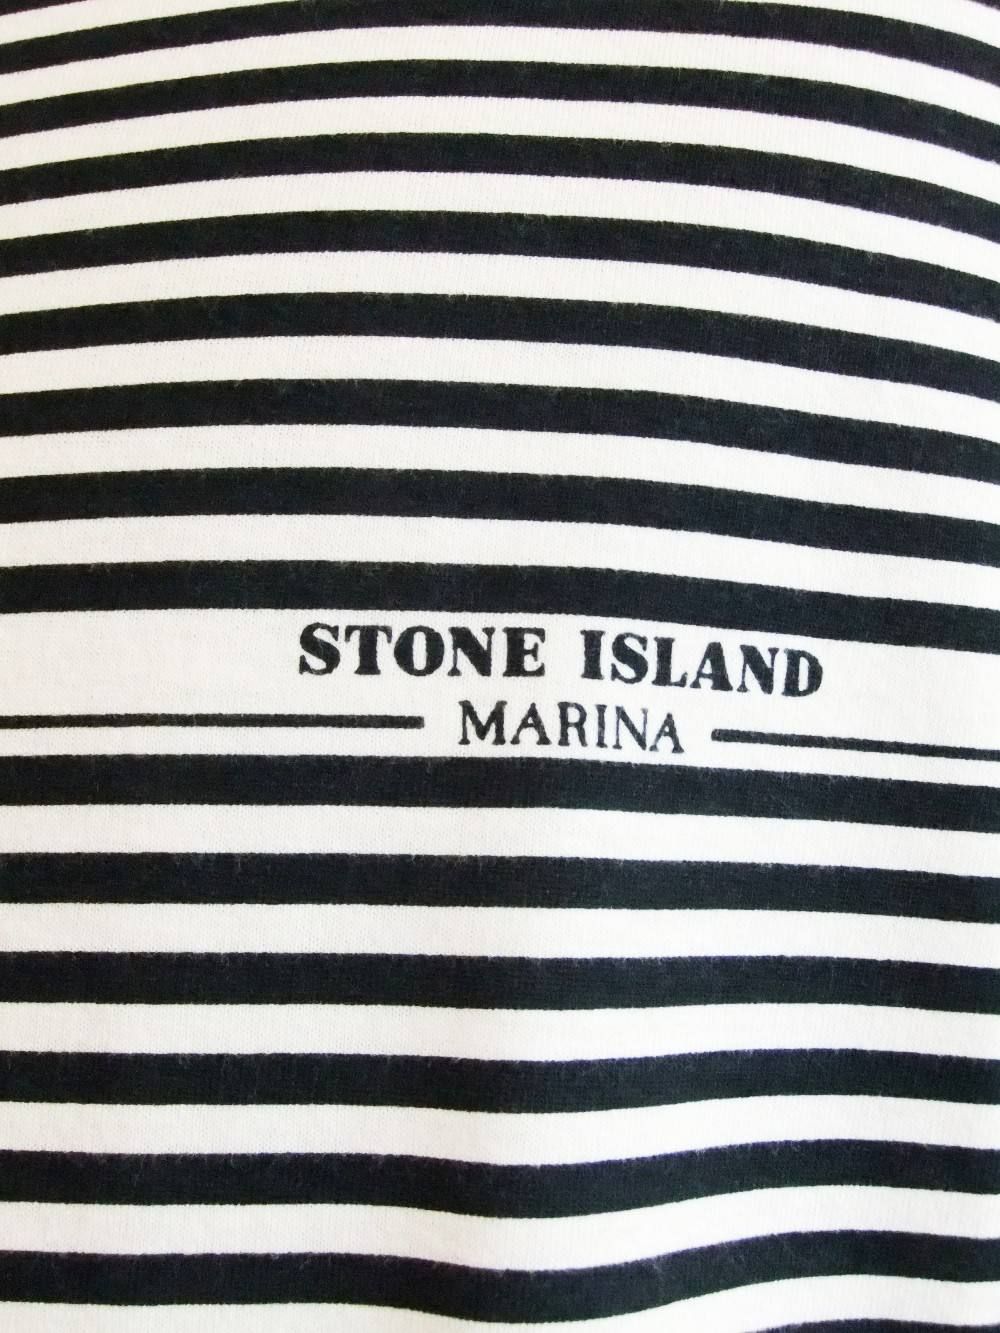 STONE ISLAND   STONE ISLAND ストーン アイランド マリーナ